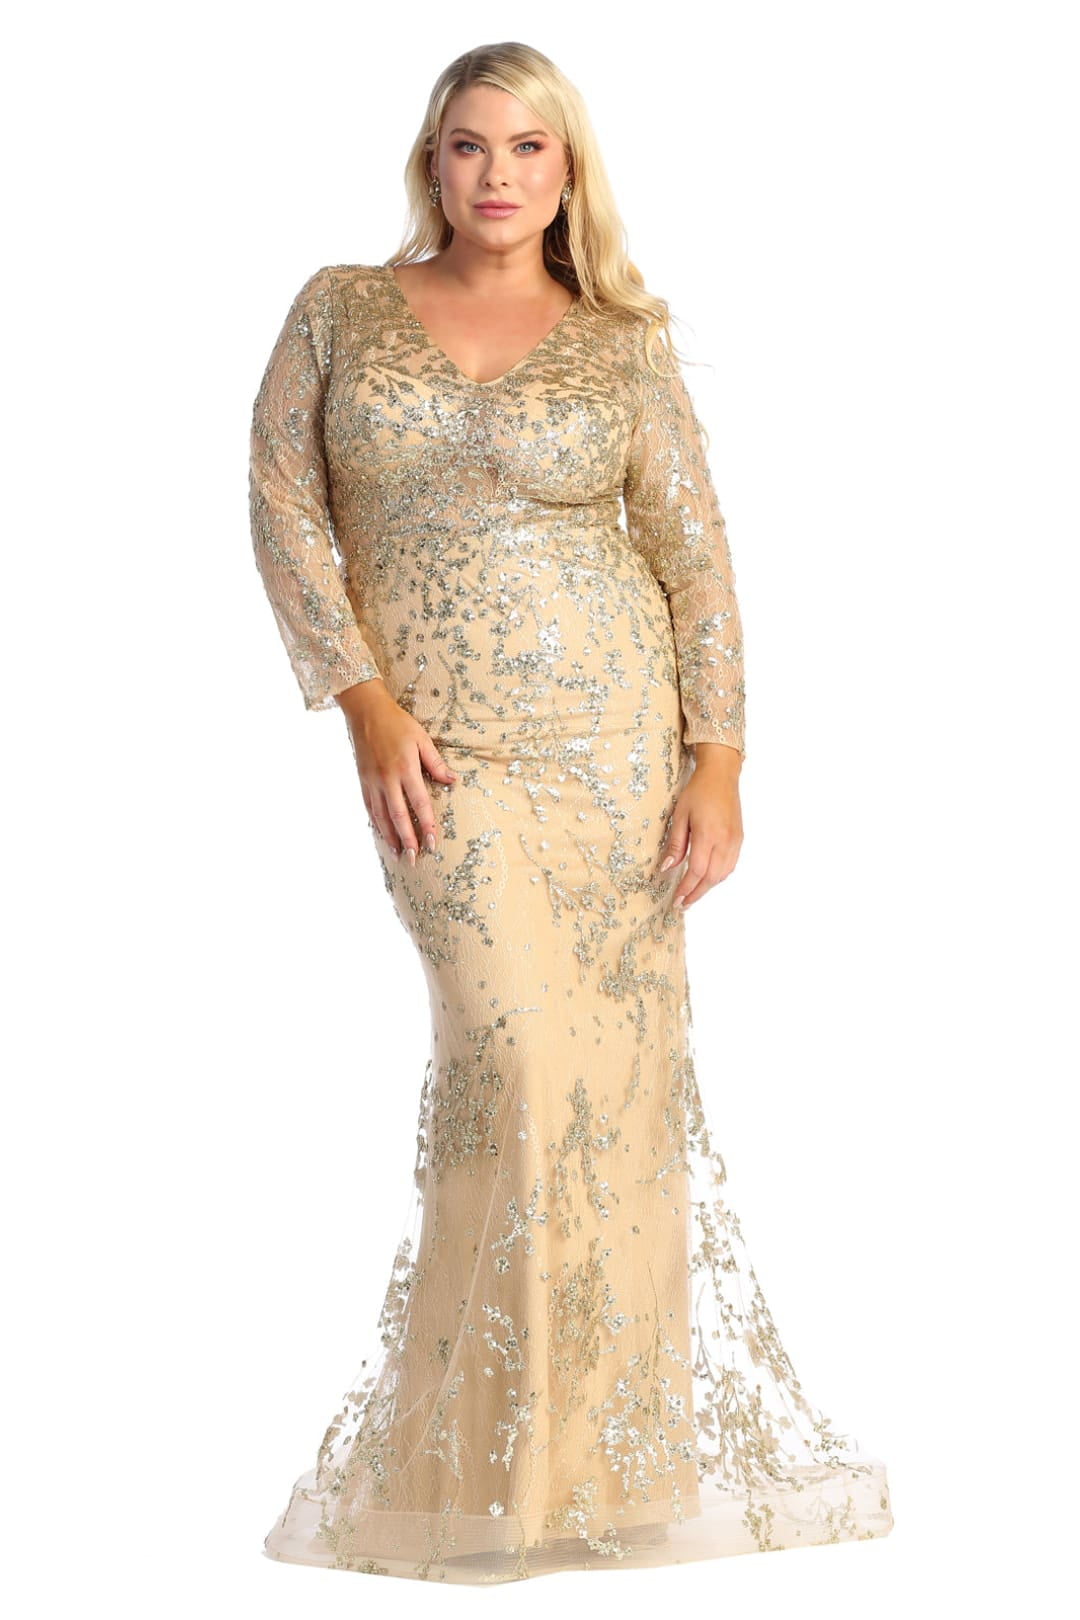 Golden dress | Fancy gowns, Prom dress inspiration, Red evening gowns